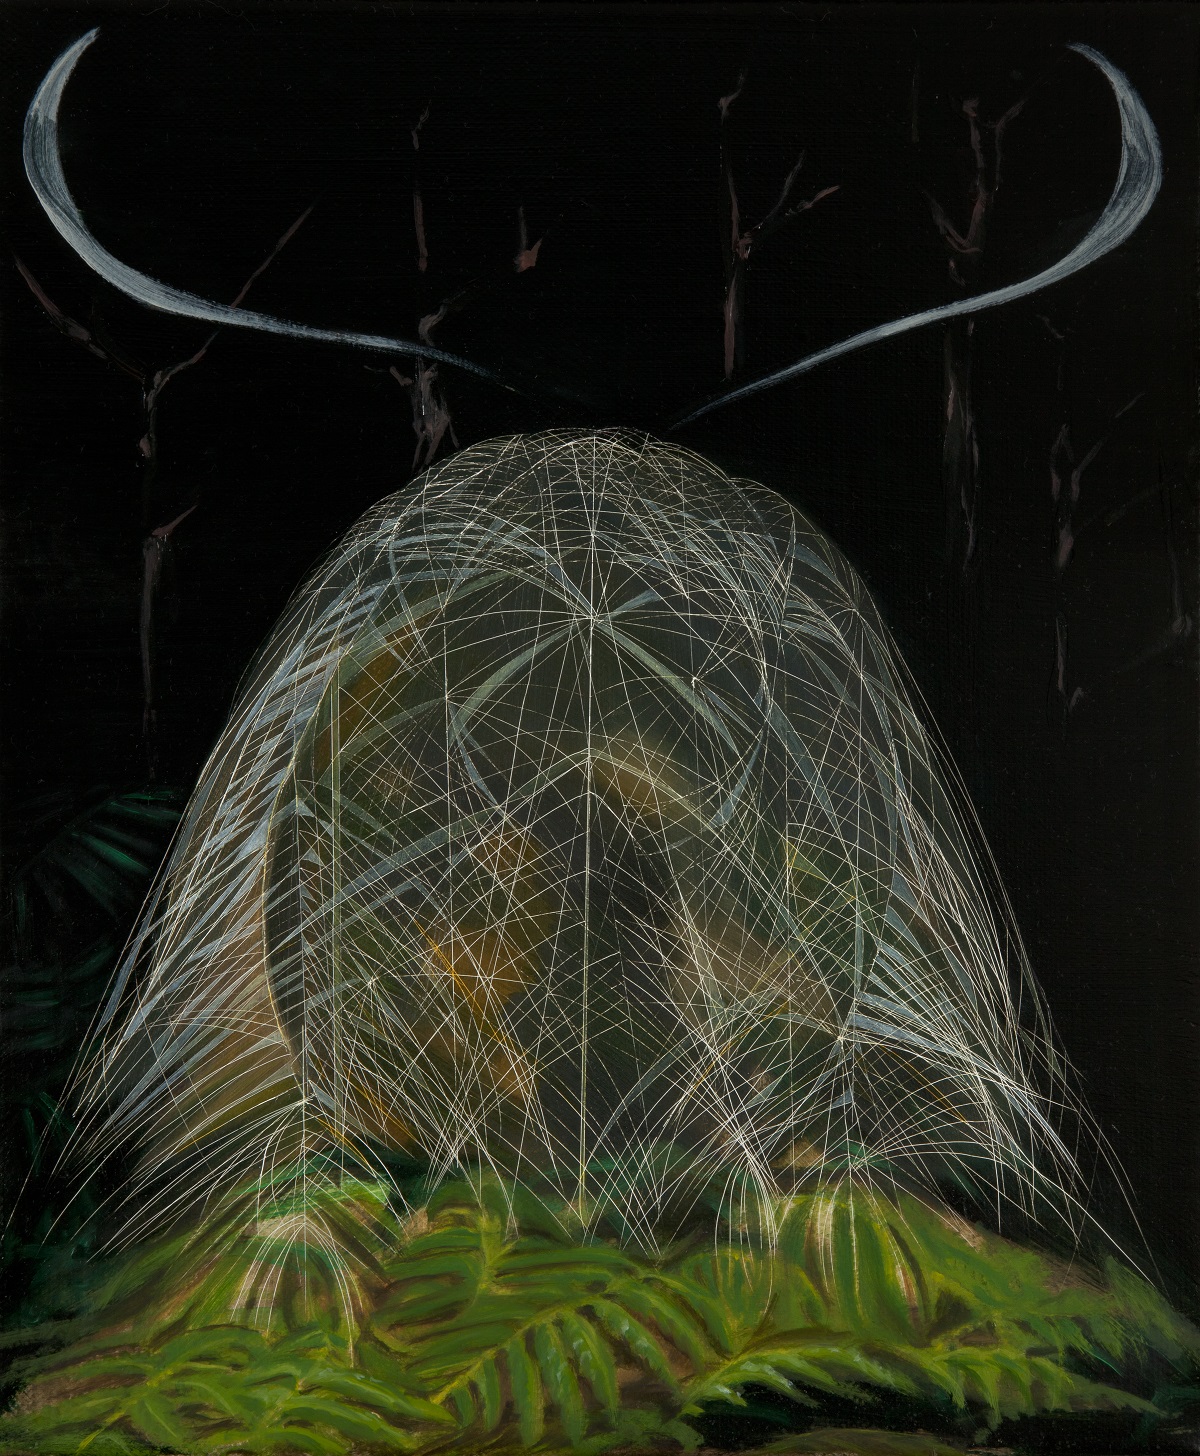 Menura novaehollandiae, New Holland harp, oil on canvas, 30 x 25cm, 2013